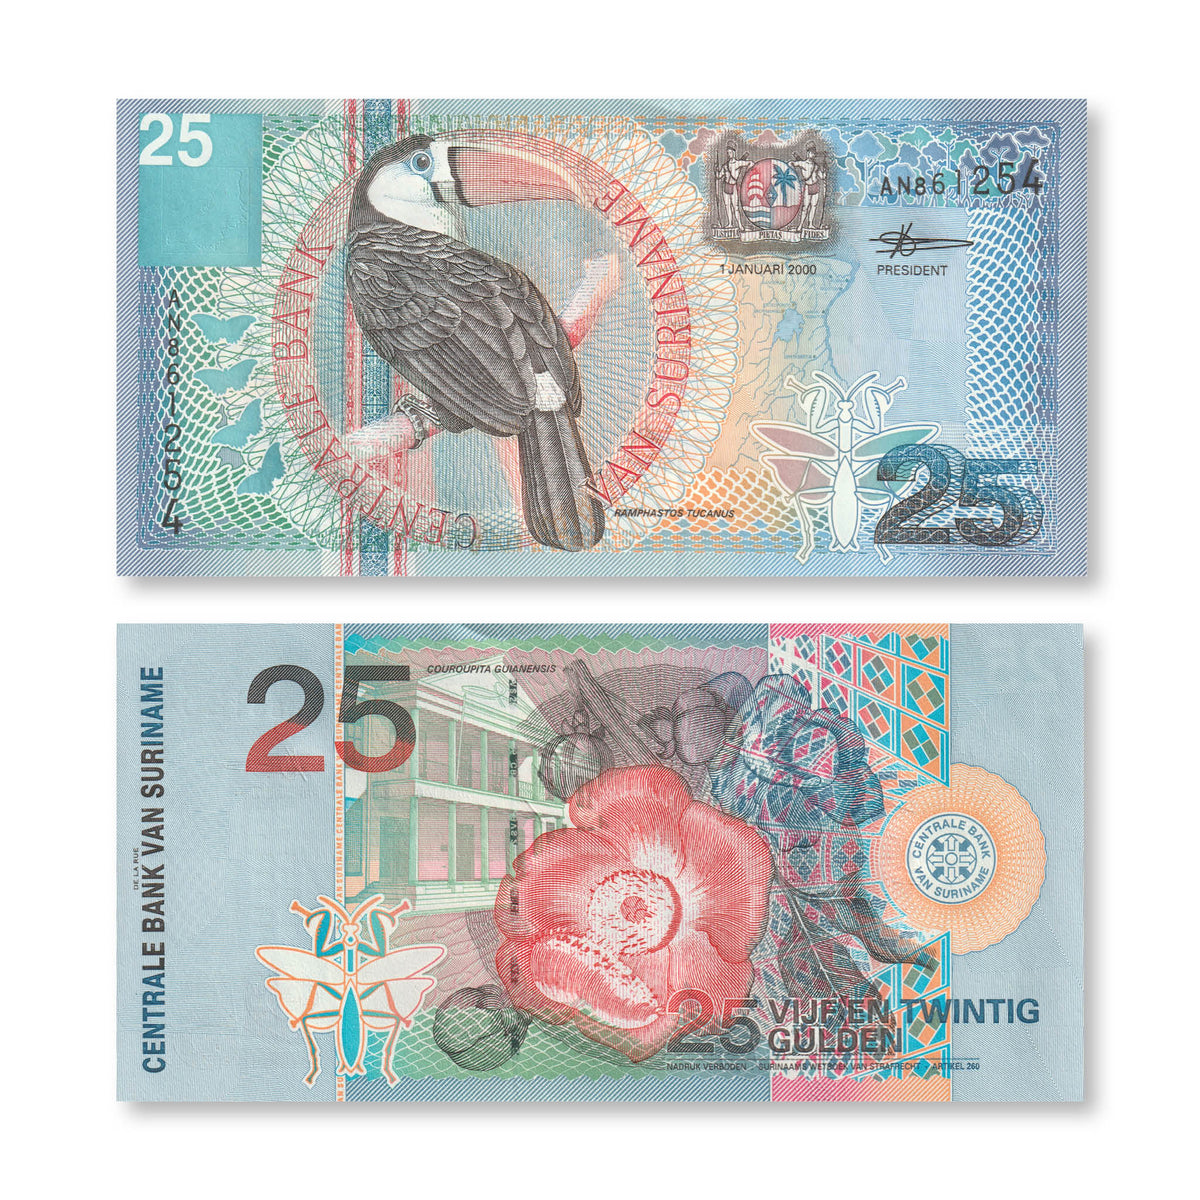 Suriname 25 Gulden, 2000, B533a, P148, UNC - Robert's World Money - World Banknotes